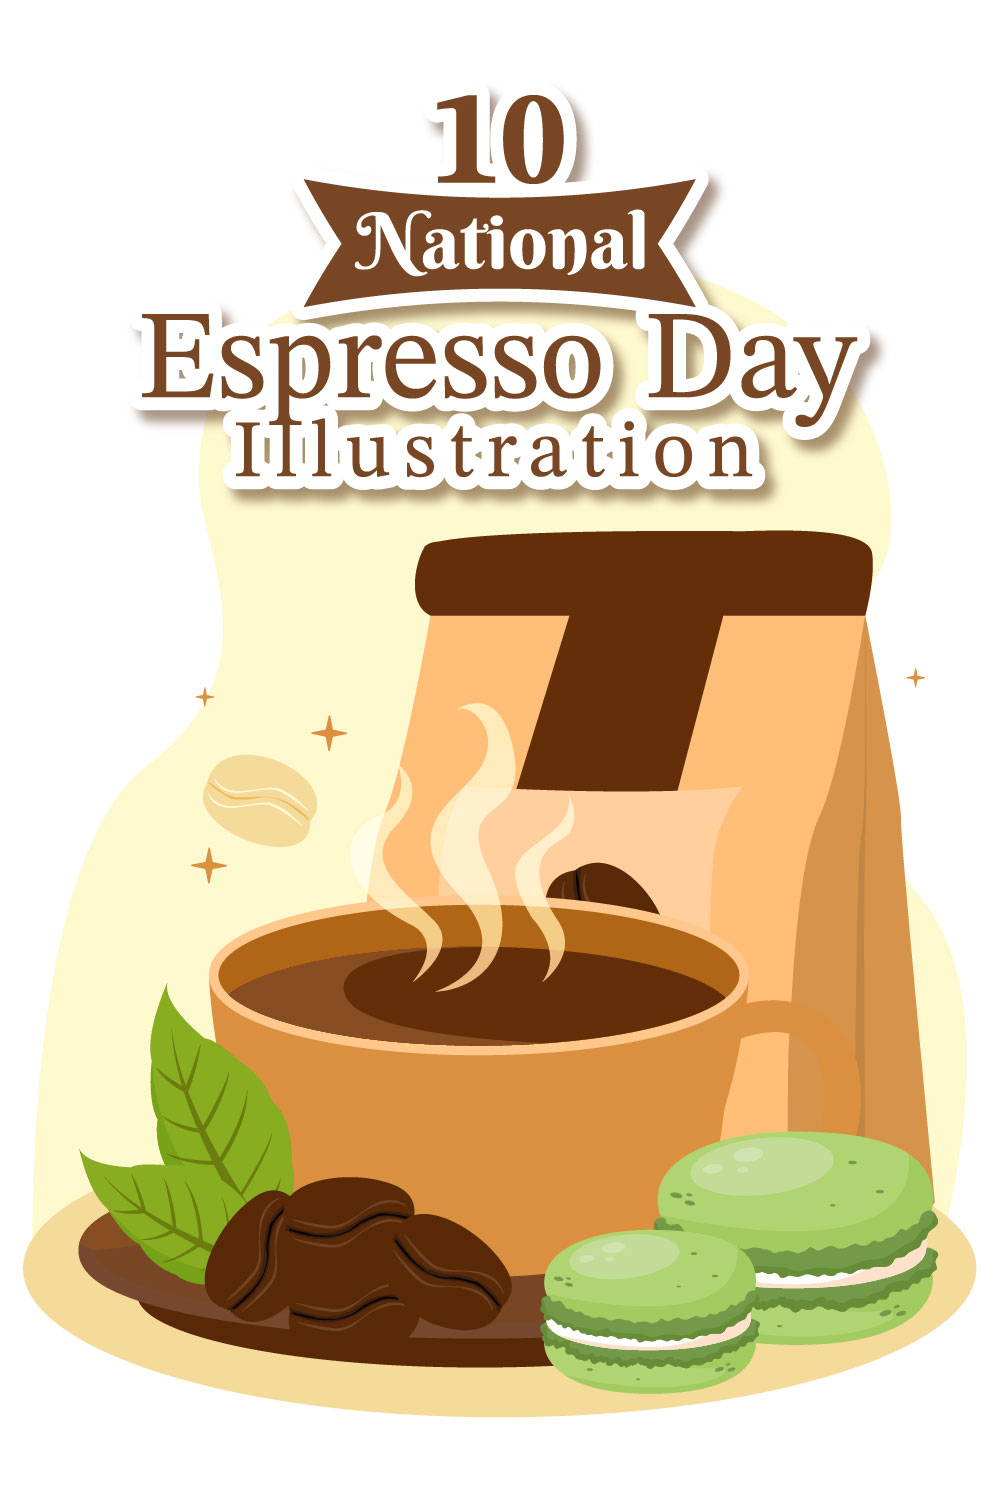 10 National Espresso Day Illustration pinterest preview image.